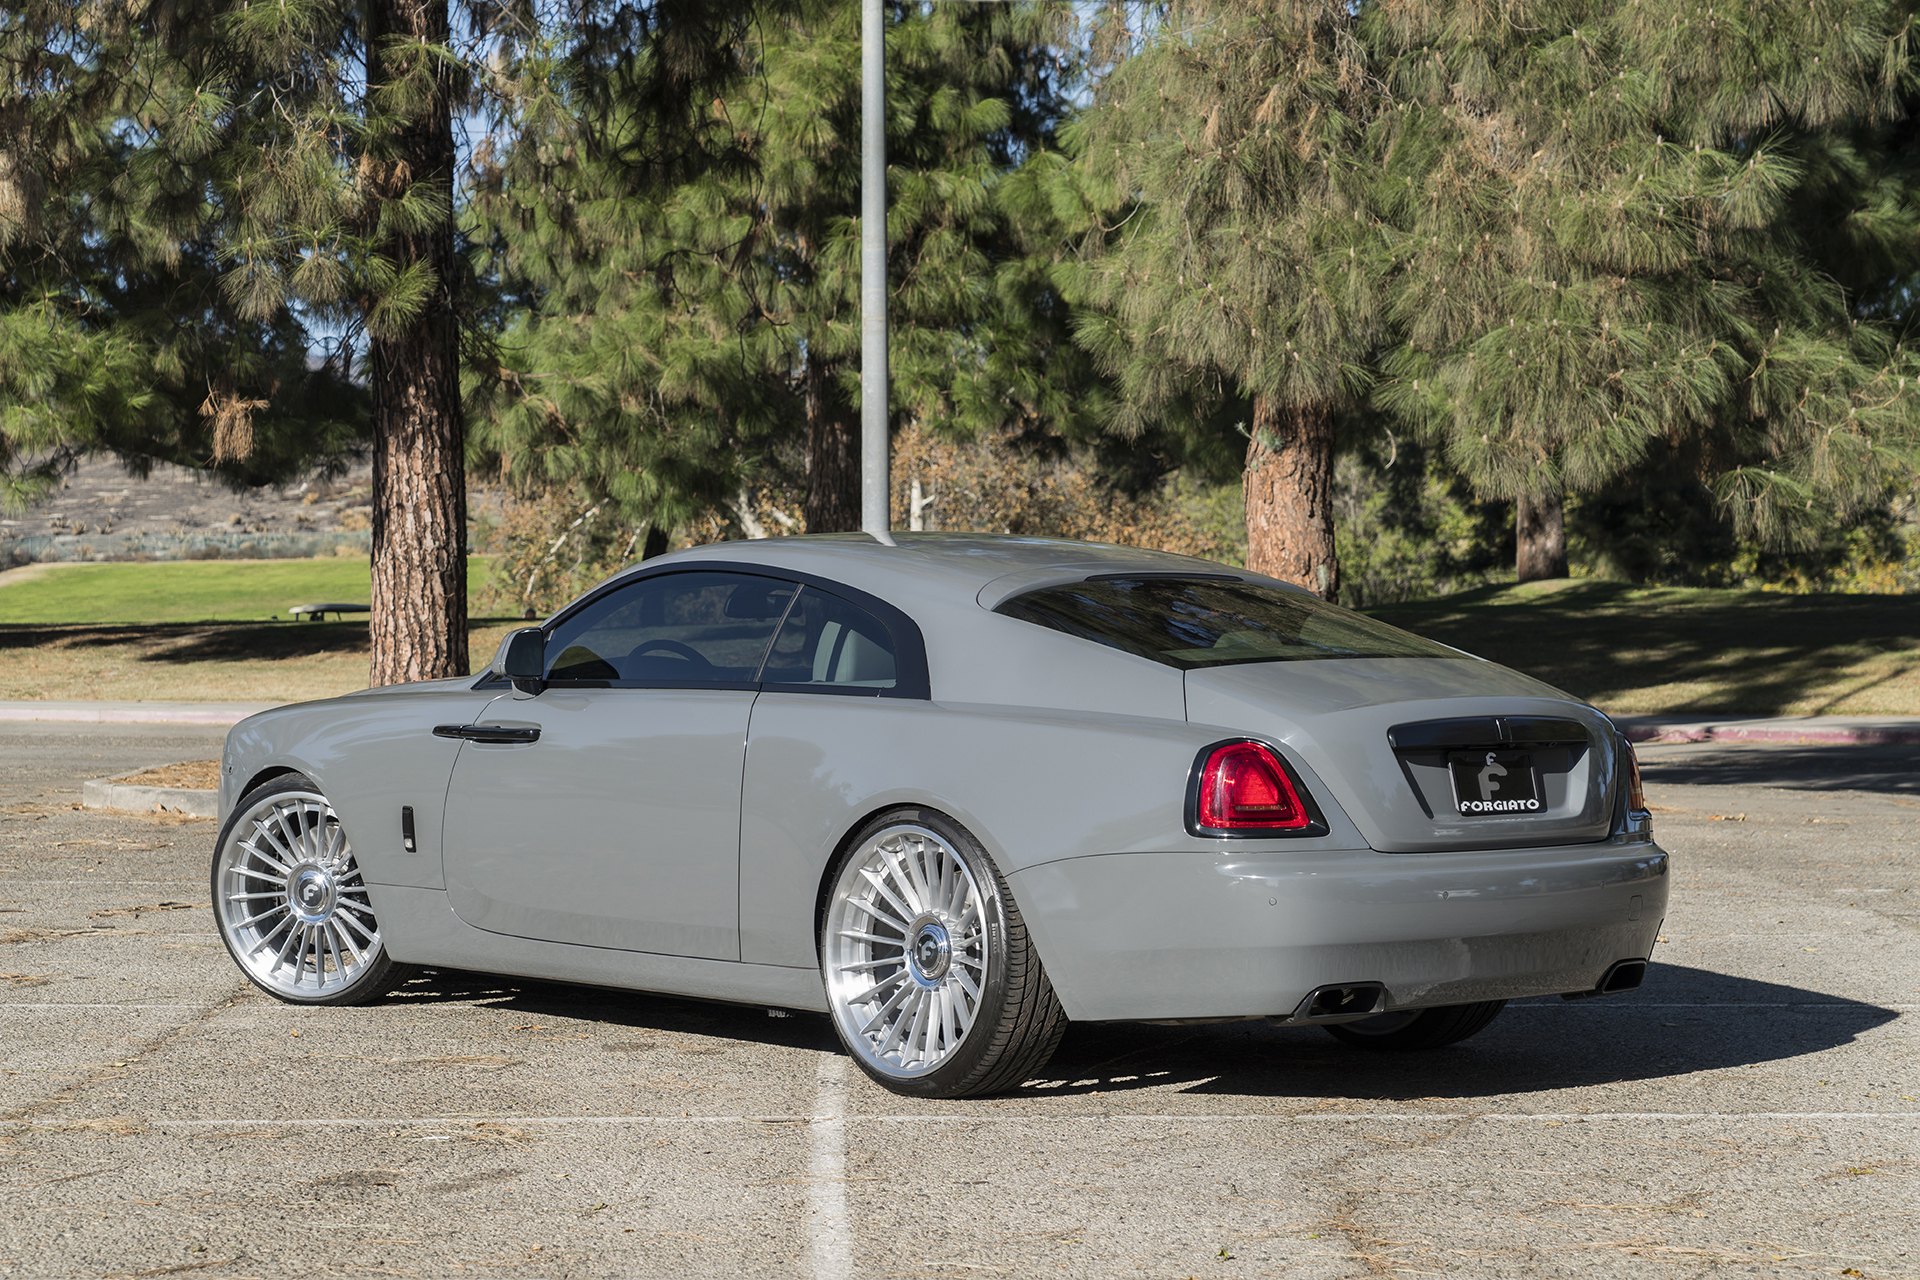 Gray Rolls Royce Wraith with Custom Chrome Forgiato Rims - Photo by Forgiato